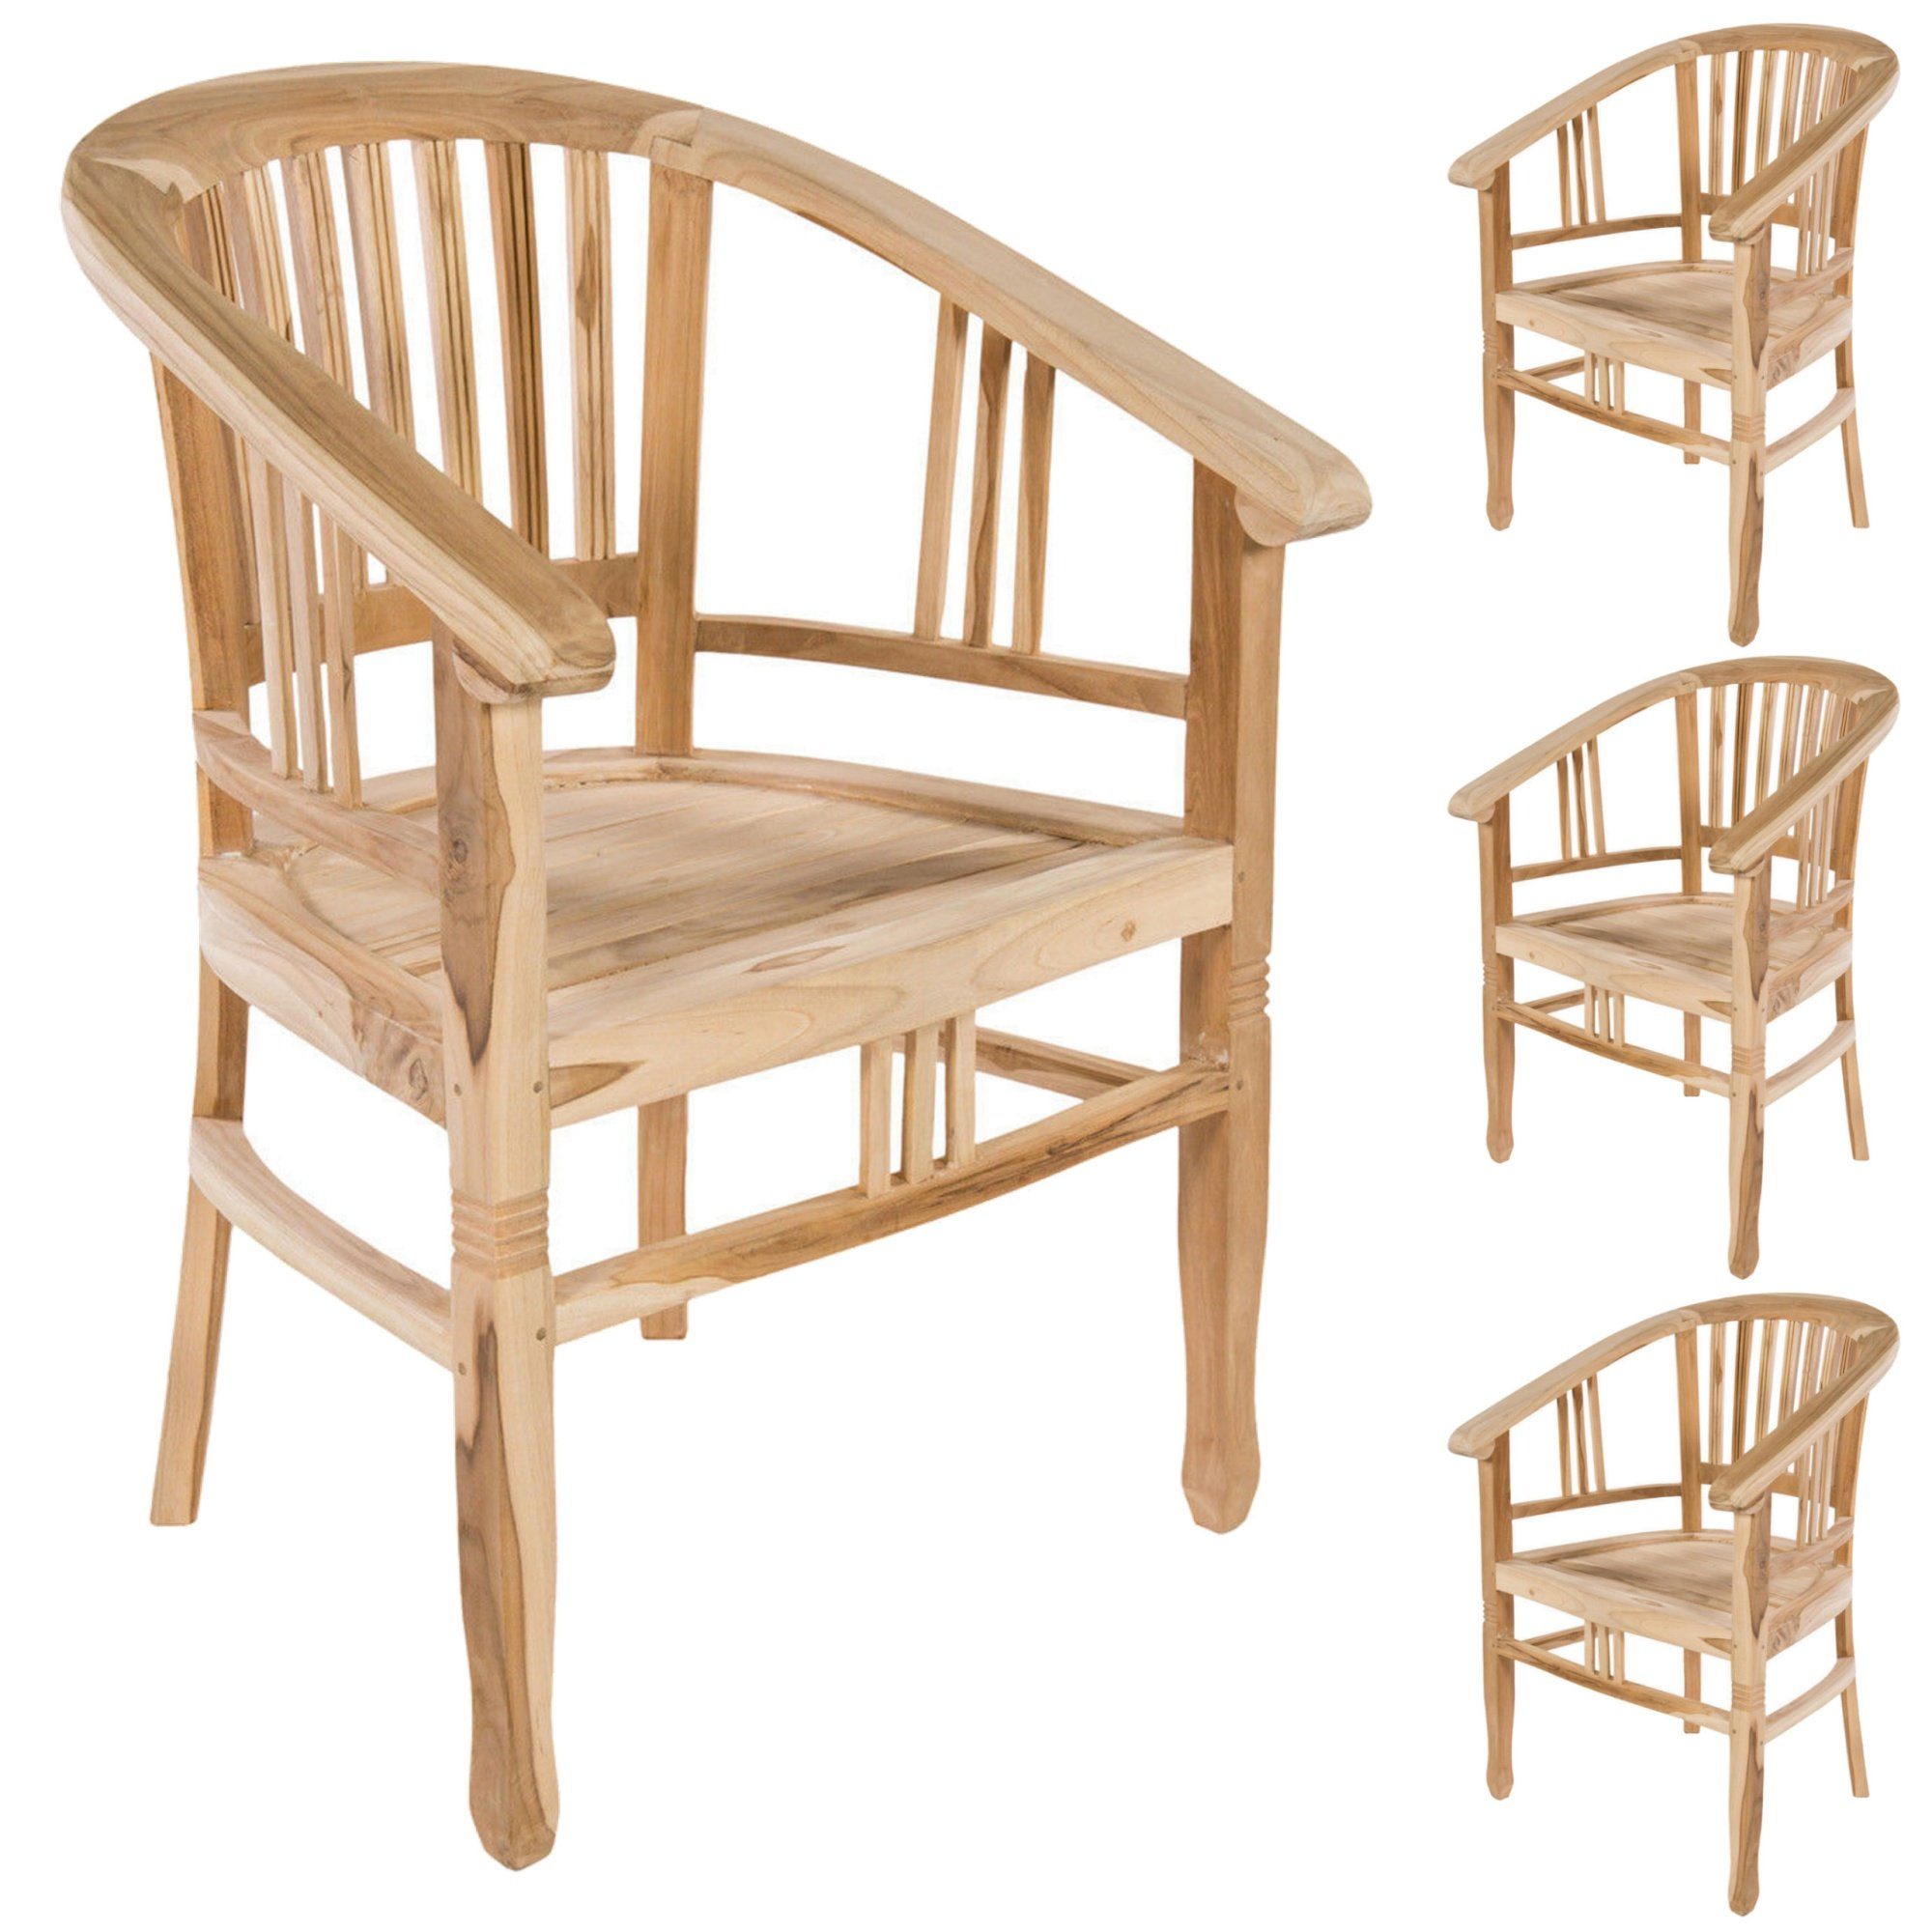 Raburg Gartenstuhl NELA XL, edler Teak-Holz-Sessel, robustes Teak,  langlebig, massiv & robust für Outdoor, Garten, Balkon & Terrasse,  Belastbarkeit 130 kg